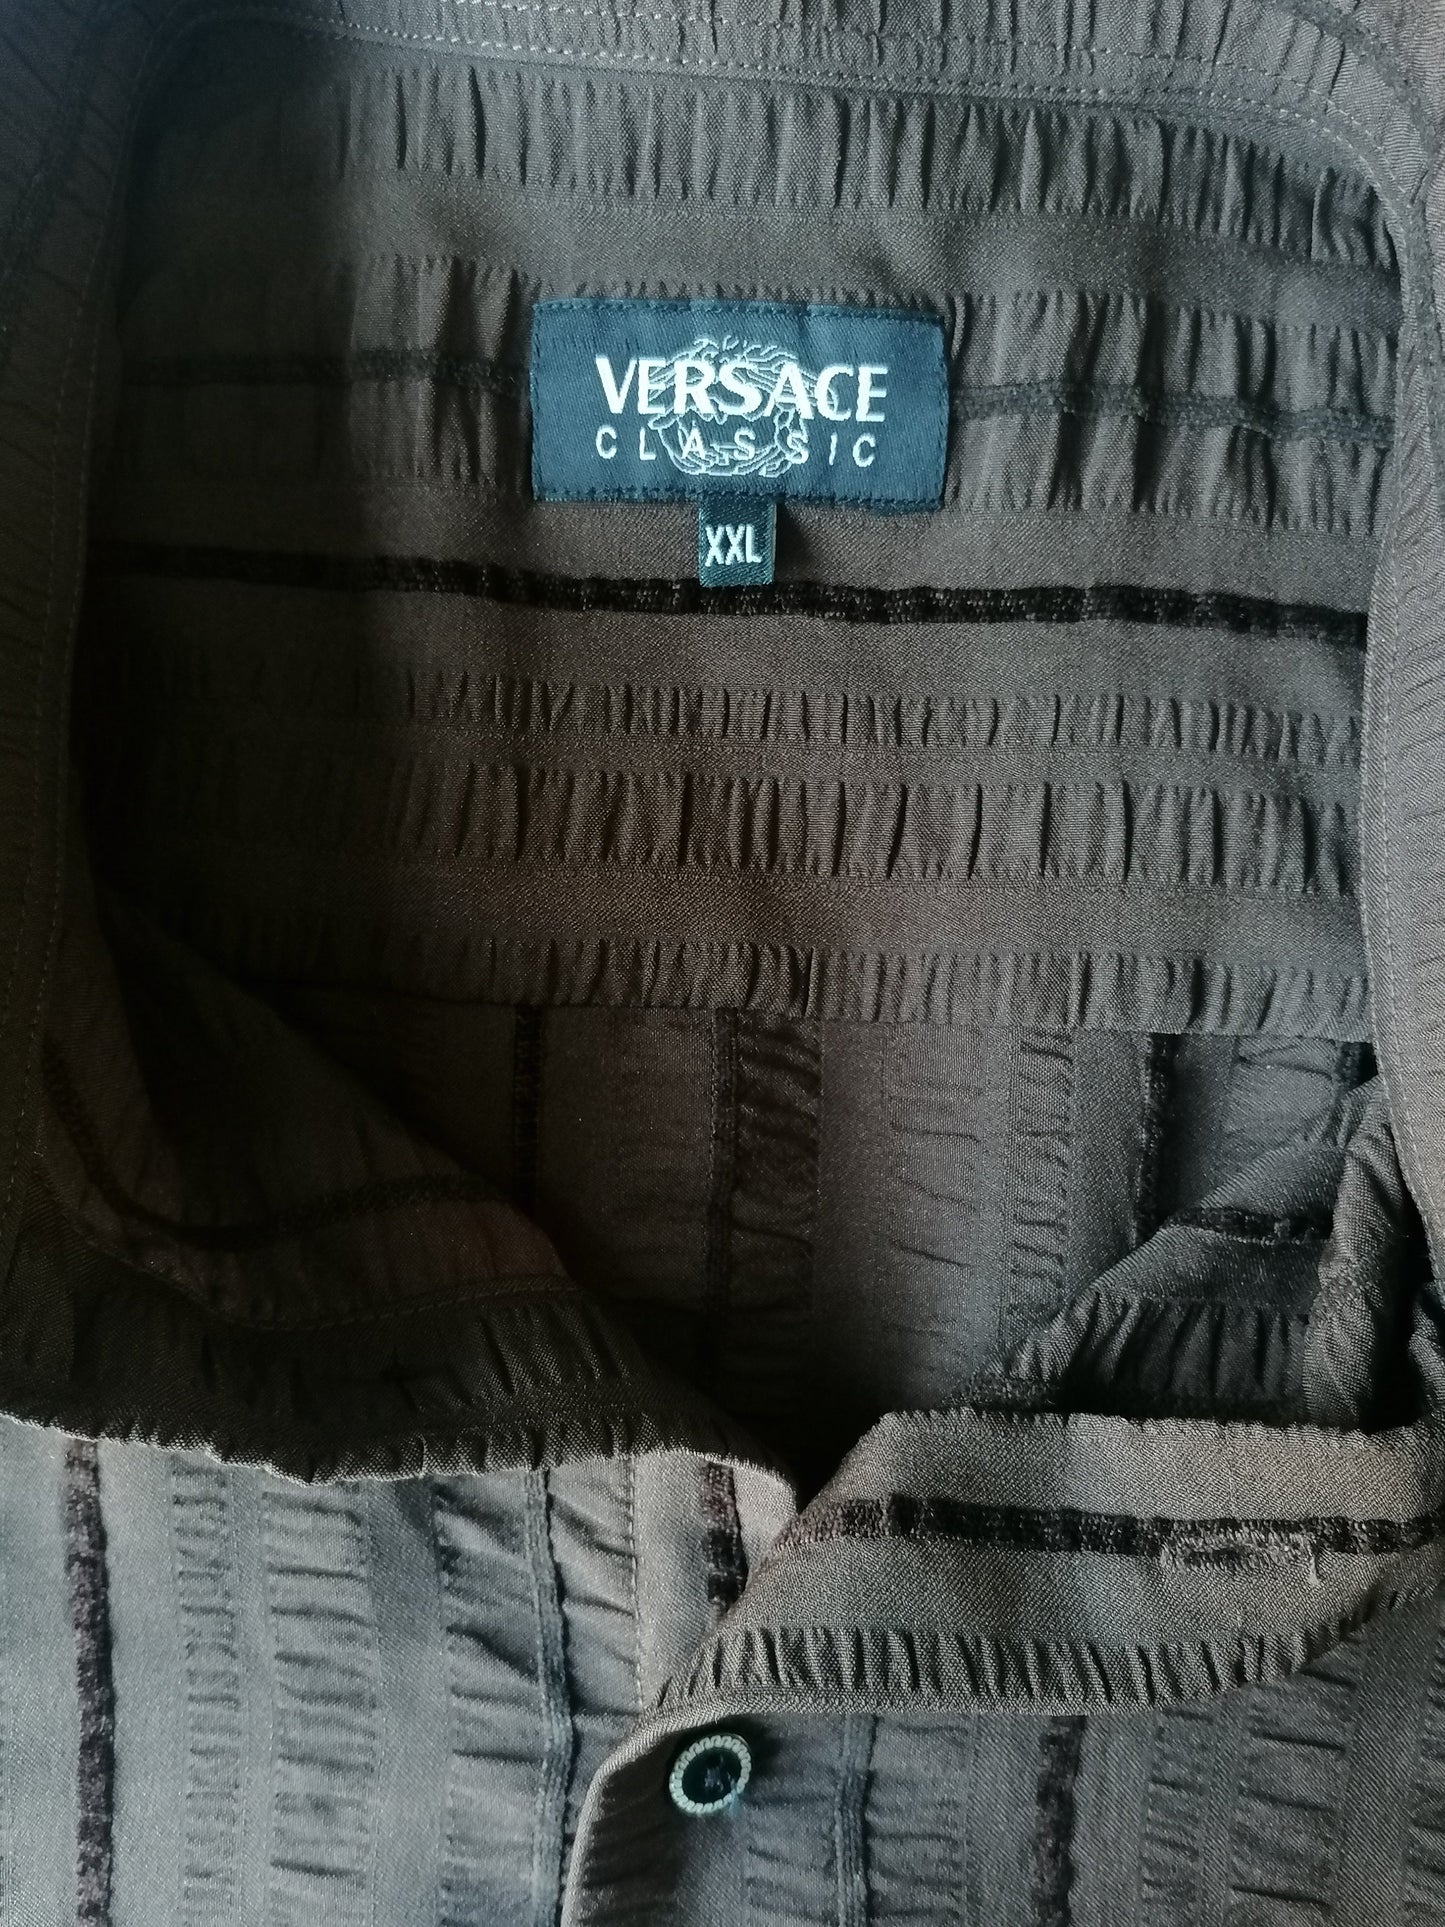 Vintage Versace Classic Shirt Kurzarm. Braun gestreift. Rippenmotiv. Größe xxl / 2xl.